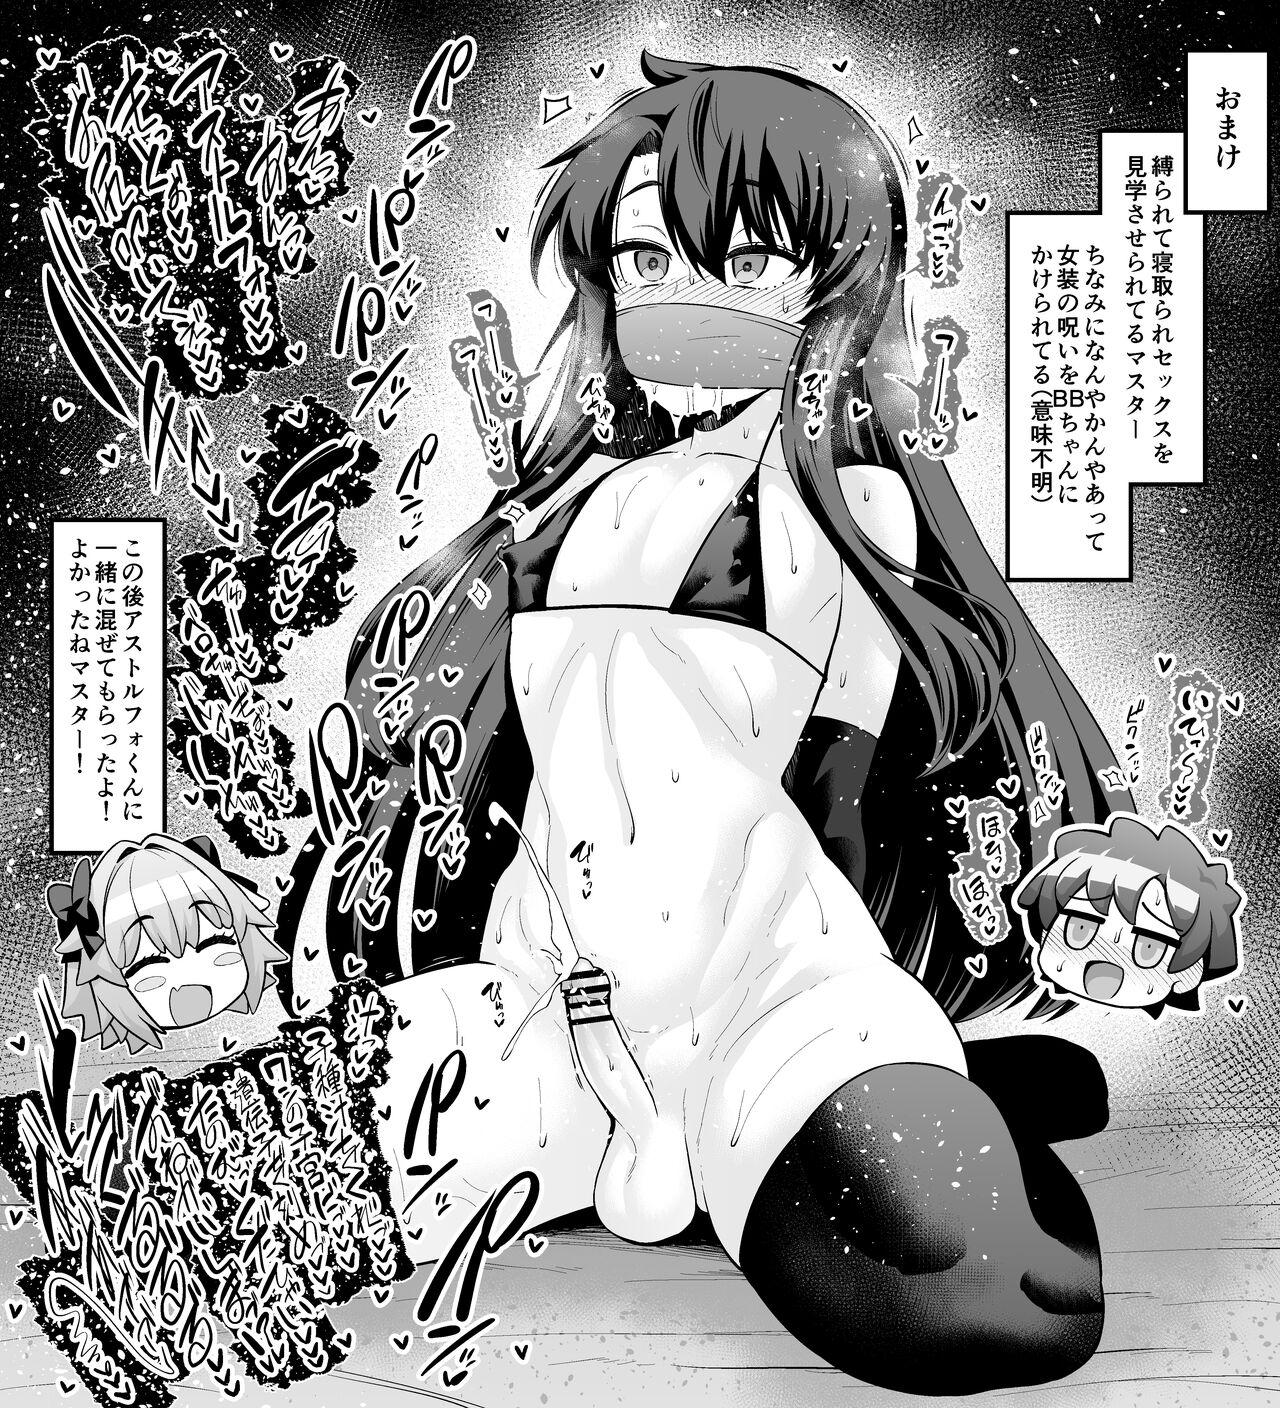 Rabo Usagidoshi, Bunny-tachi no Utage - Fate grand order From - Page 6